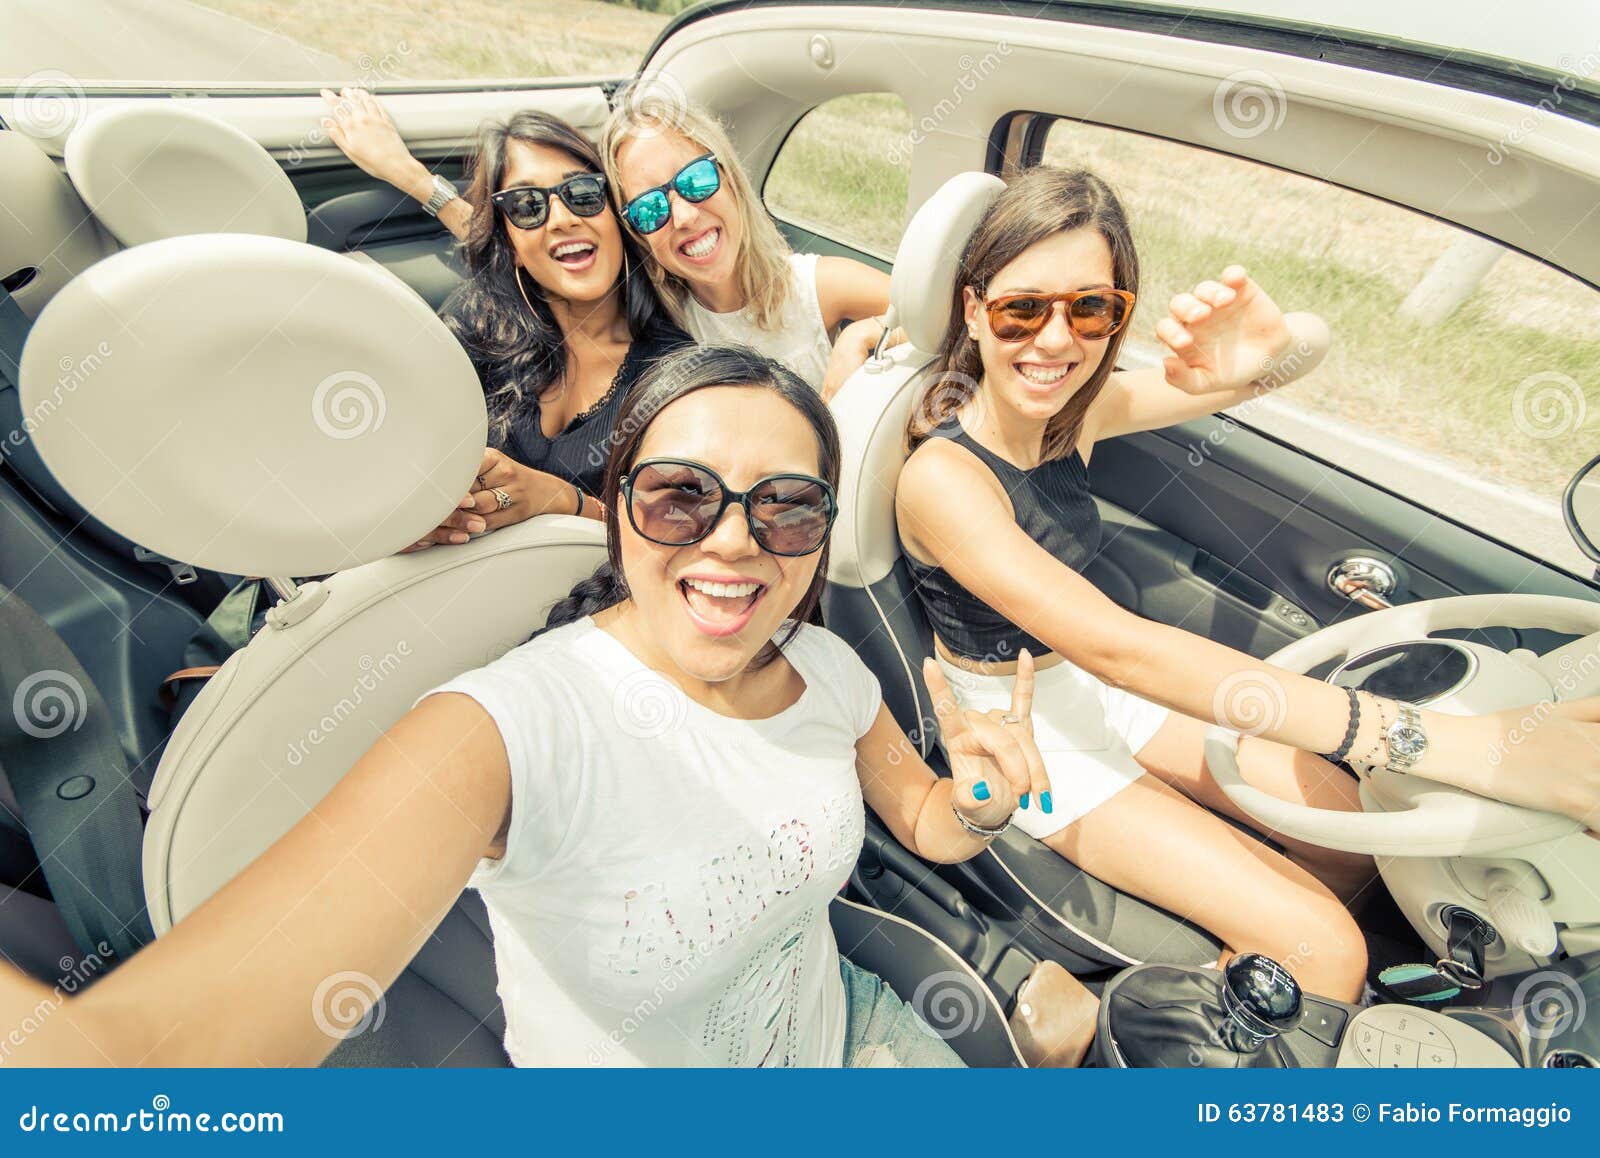 pretty car group selfie porn photo